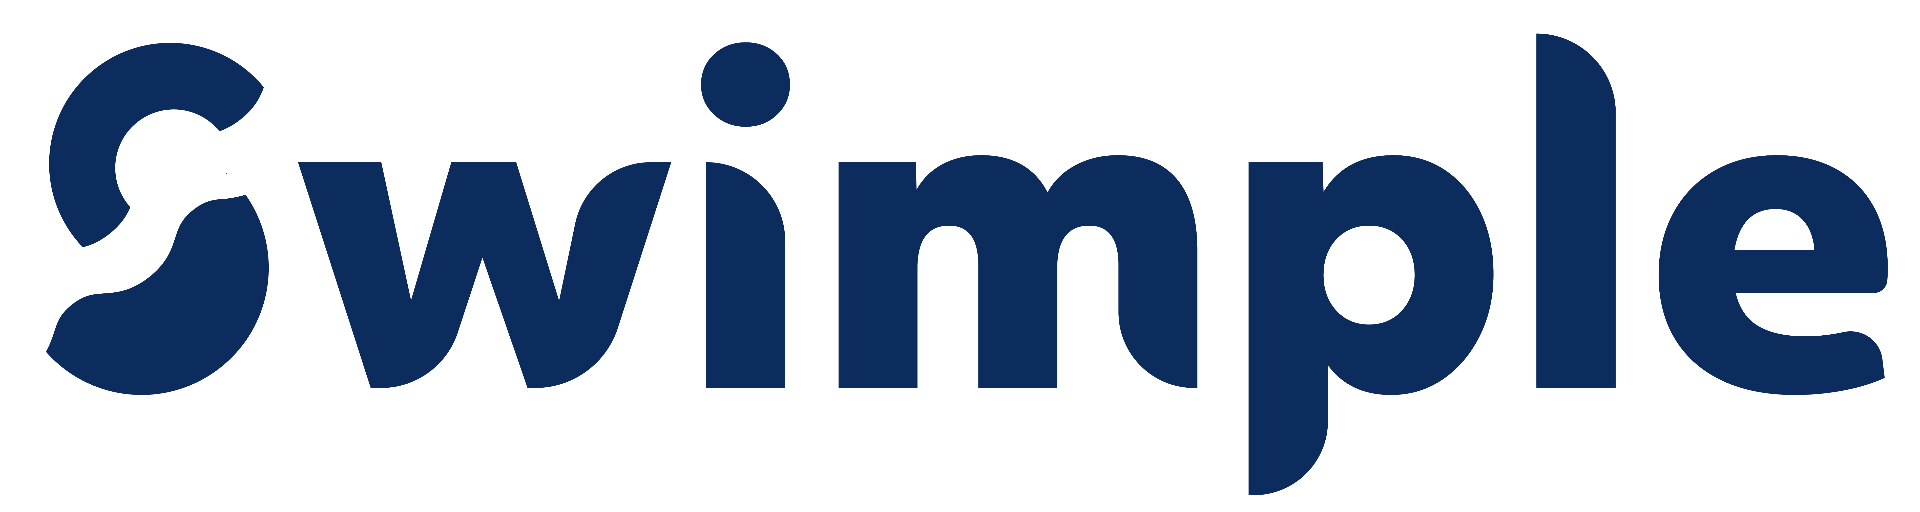 img-logo-navbar